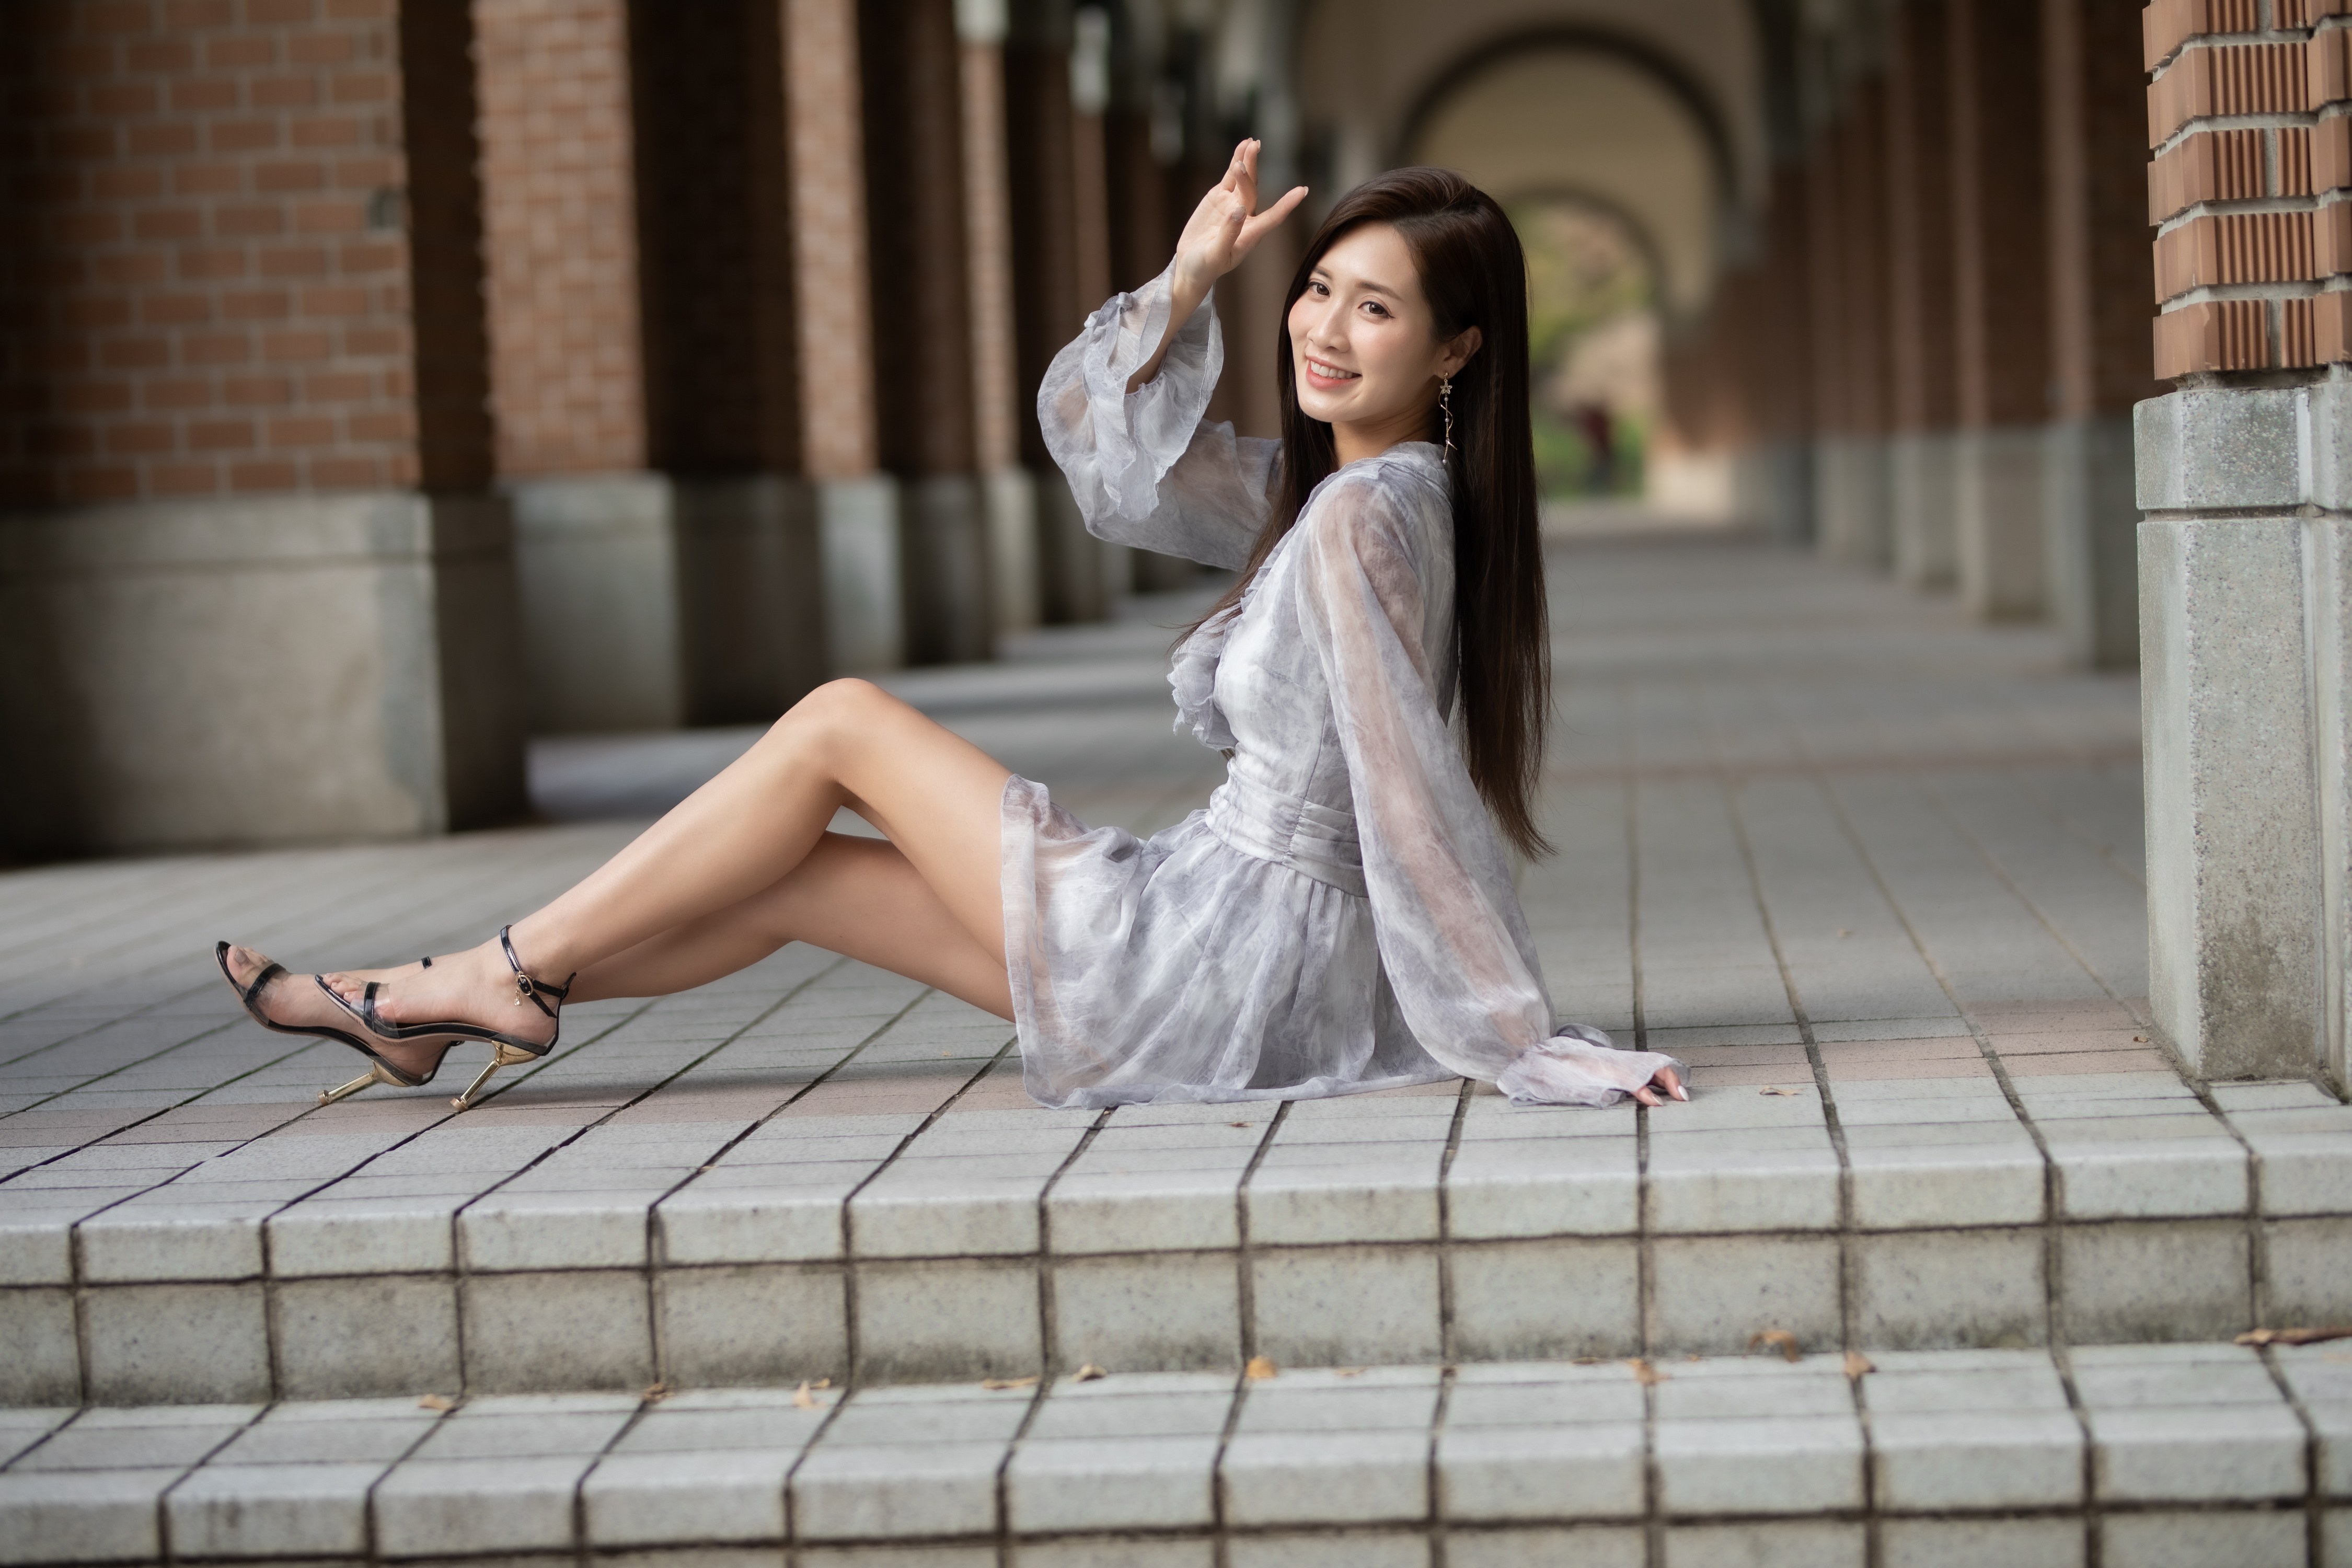 Asian Model Women Long Hair Dark Hair Sitting Barefoot Sandal Heels Stairs 4500x3000